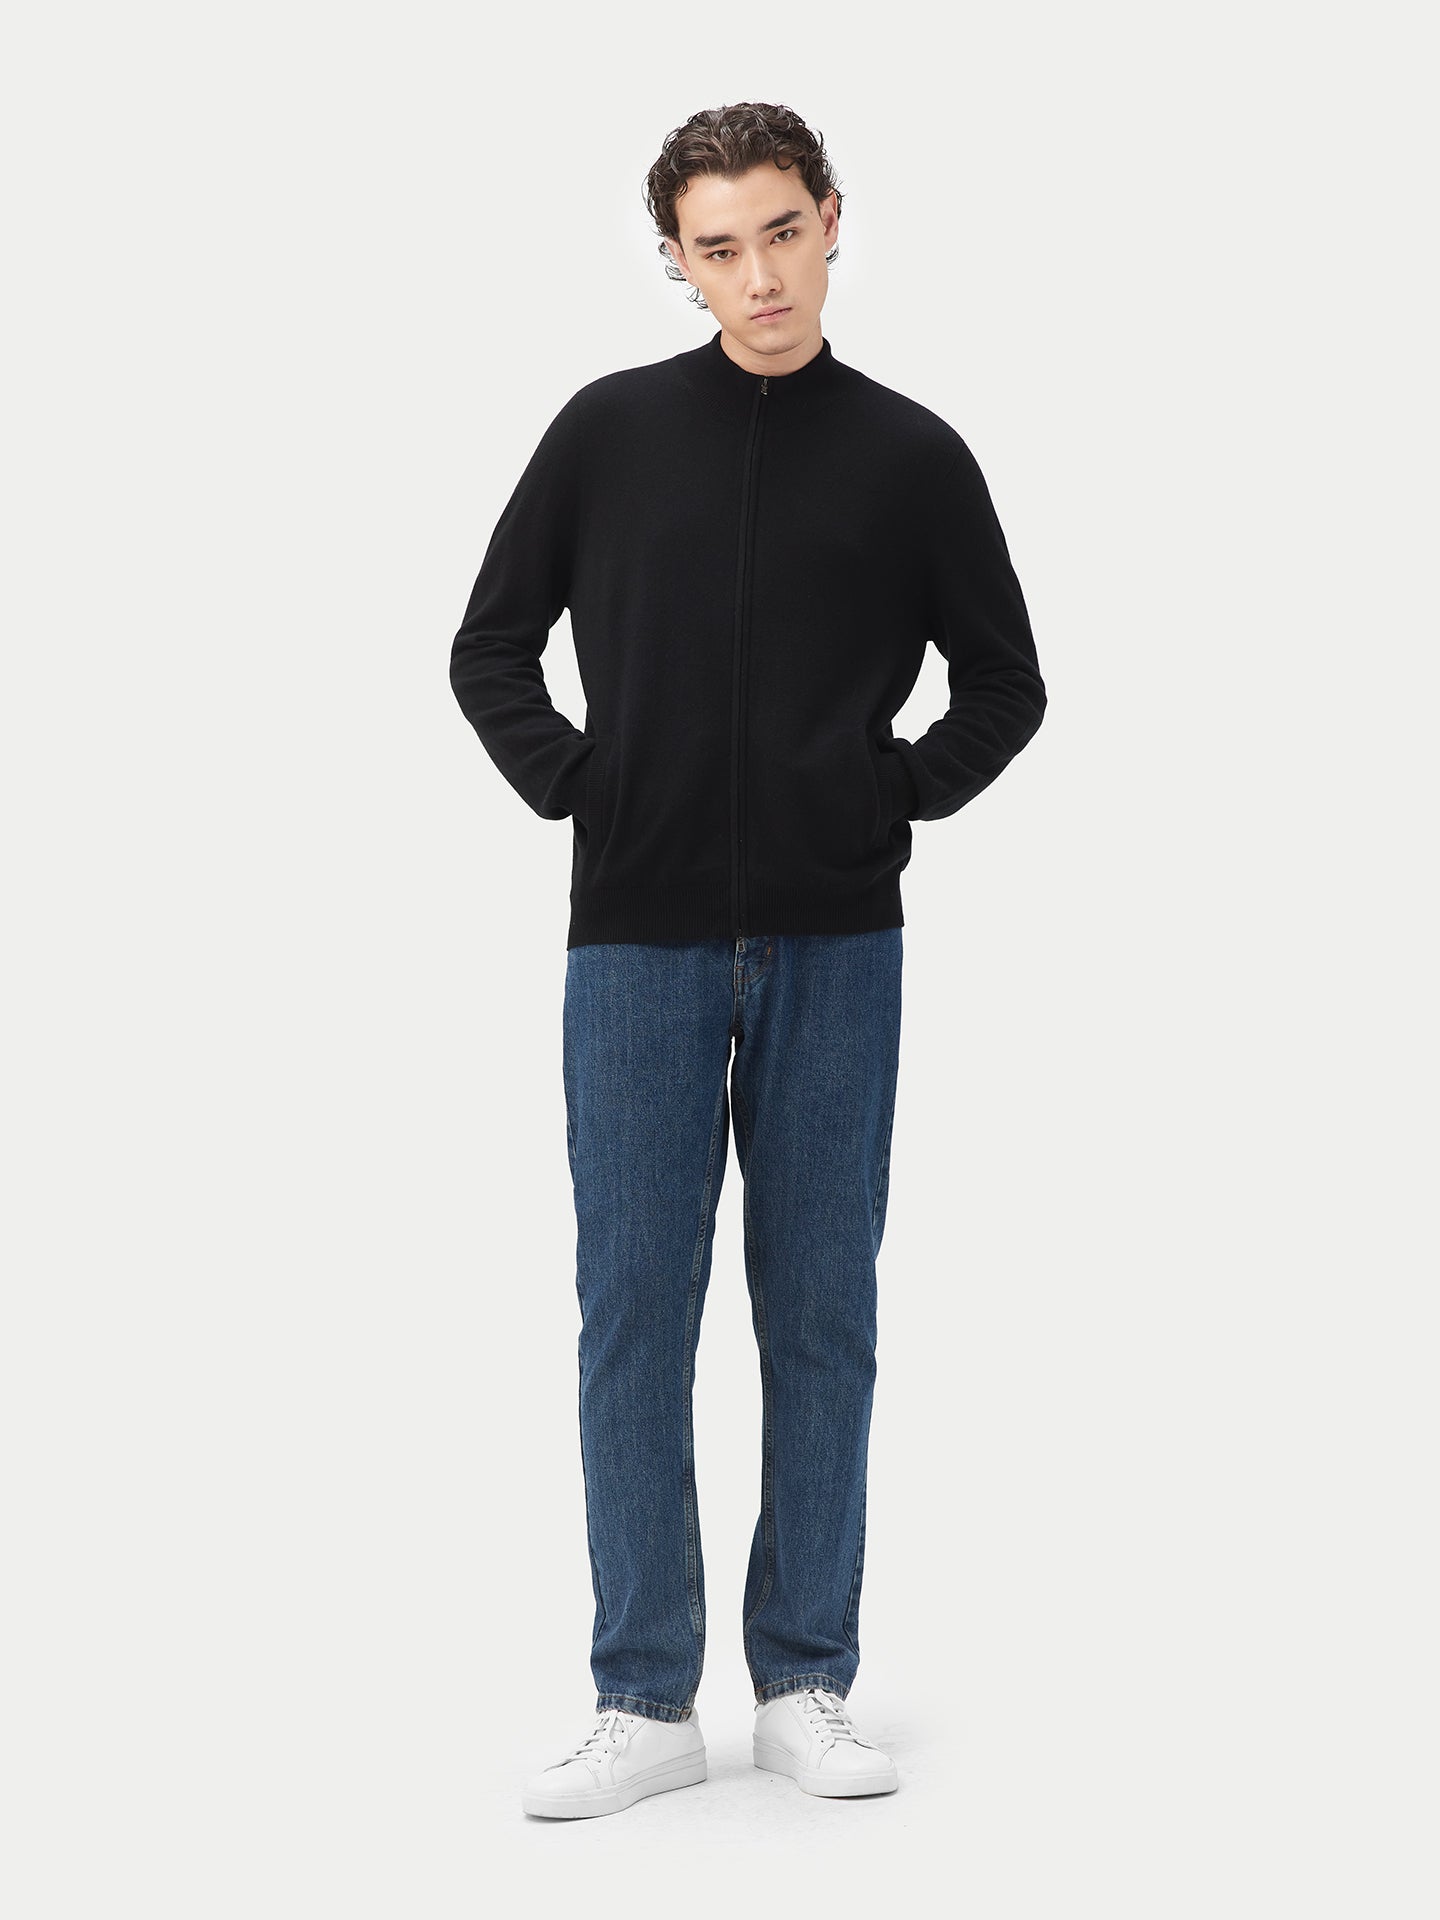 Men's Cashmere Full-Zip Cardigan Black - Gobi Cashmere